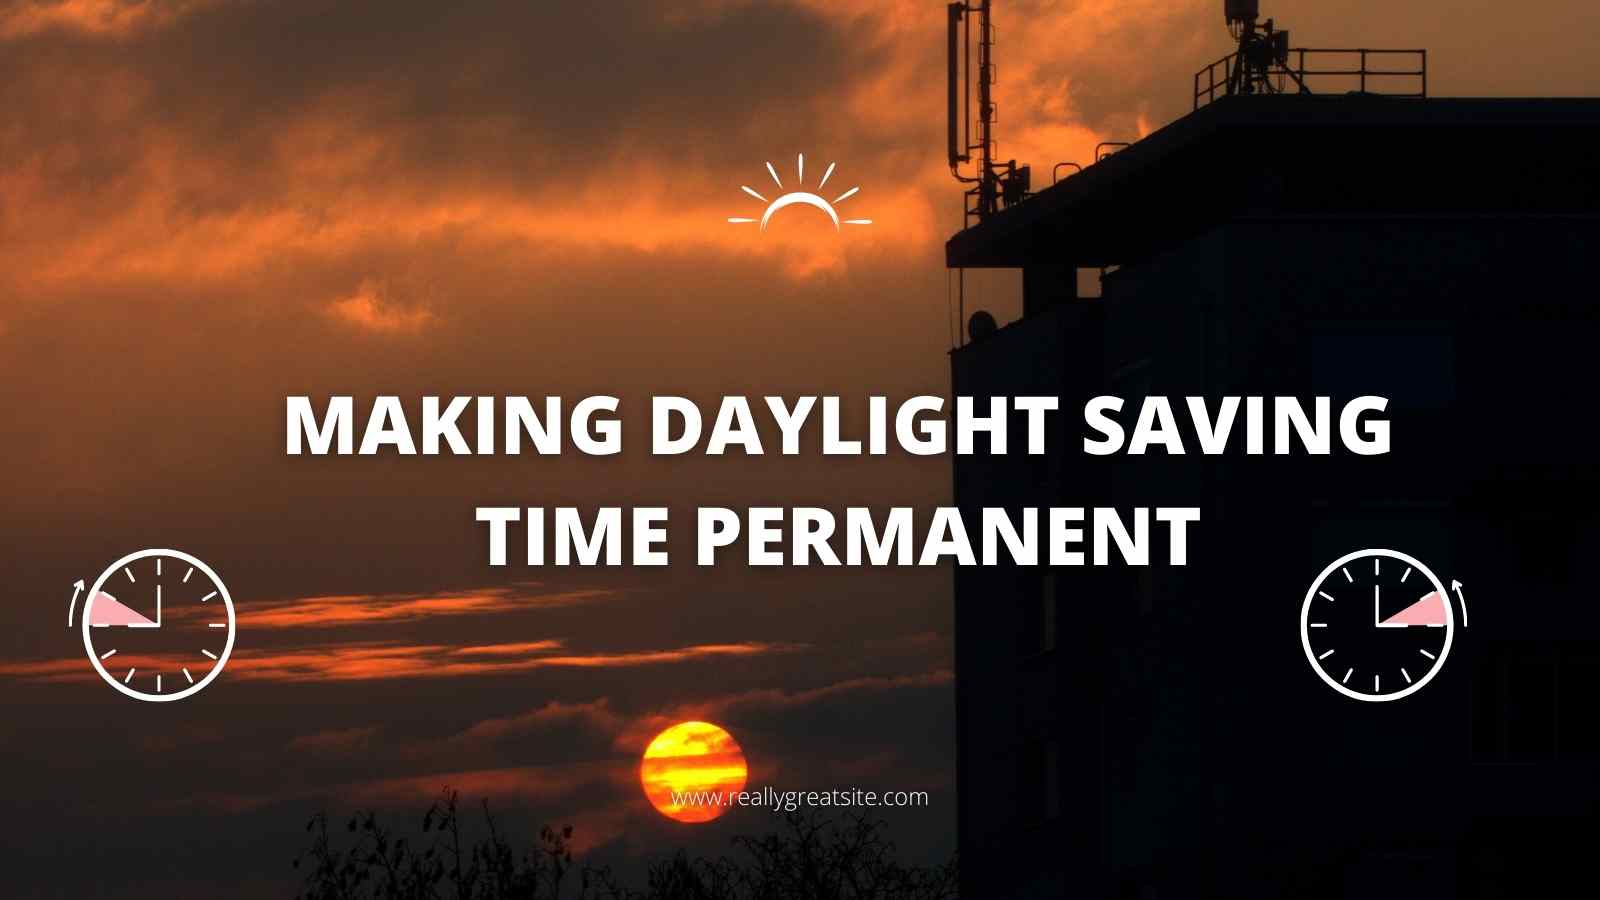 Making Daylight Saving Time Permanent, Morning sunrise sea side picture